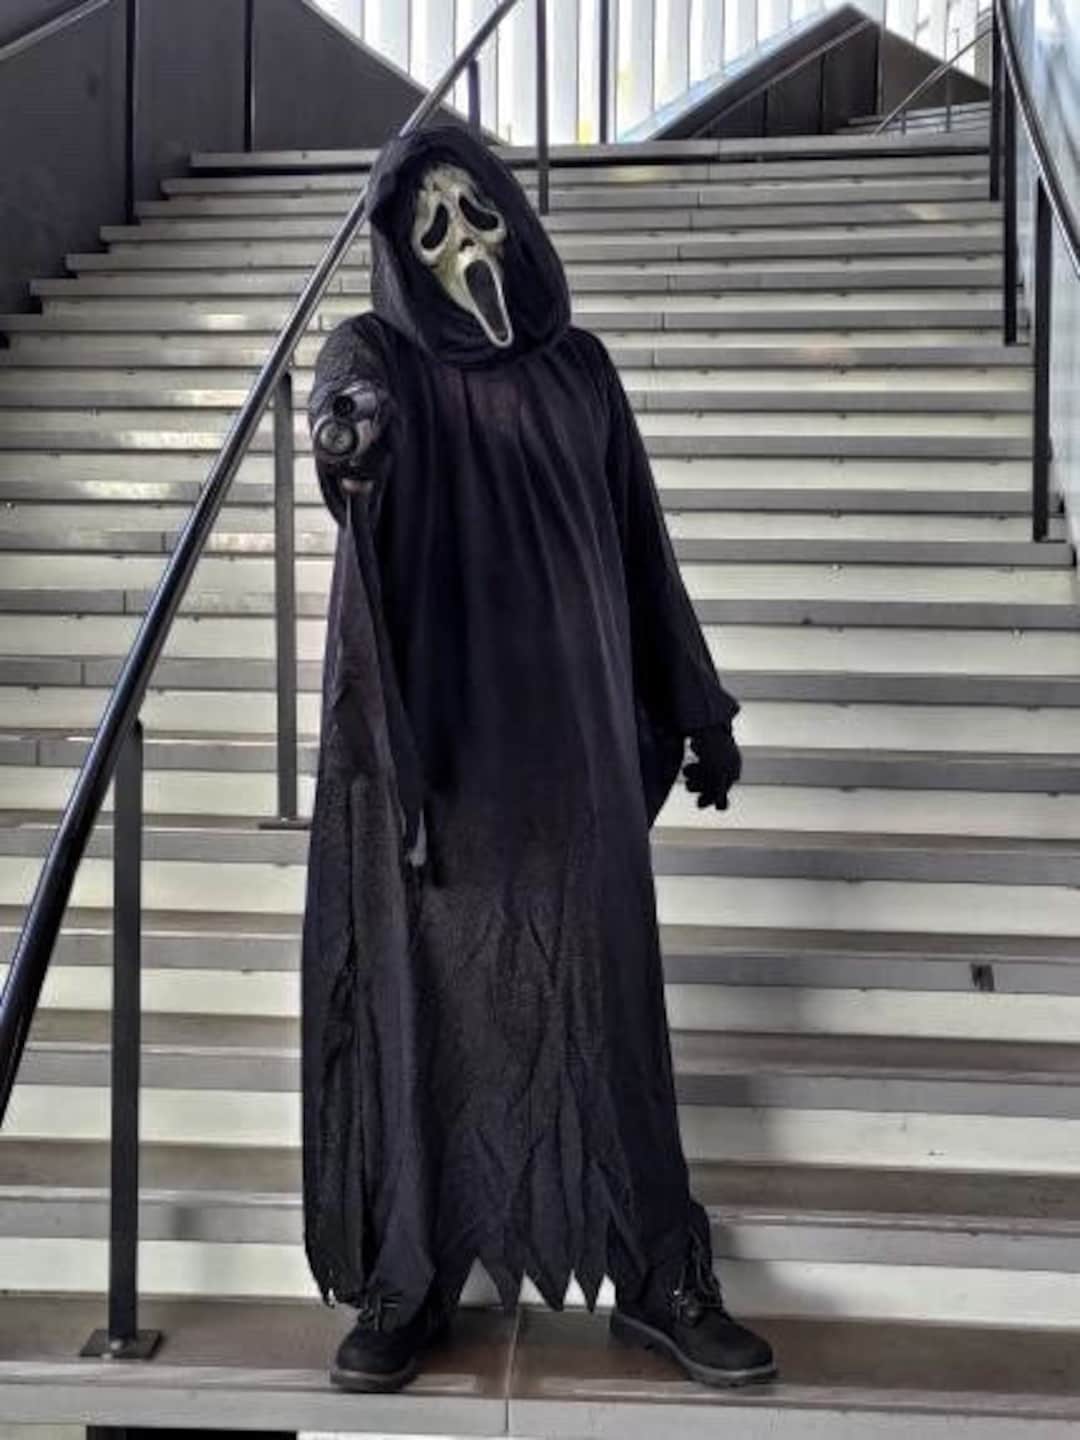 Blank Female Mask Halloween Accessory